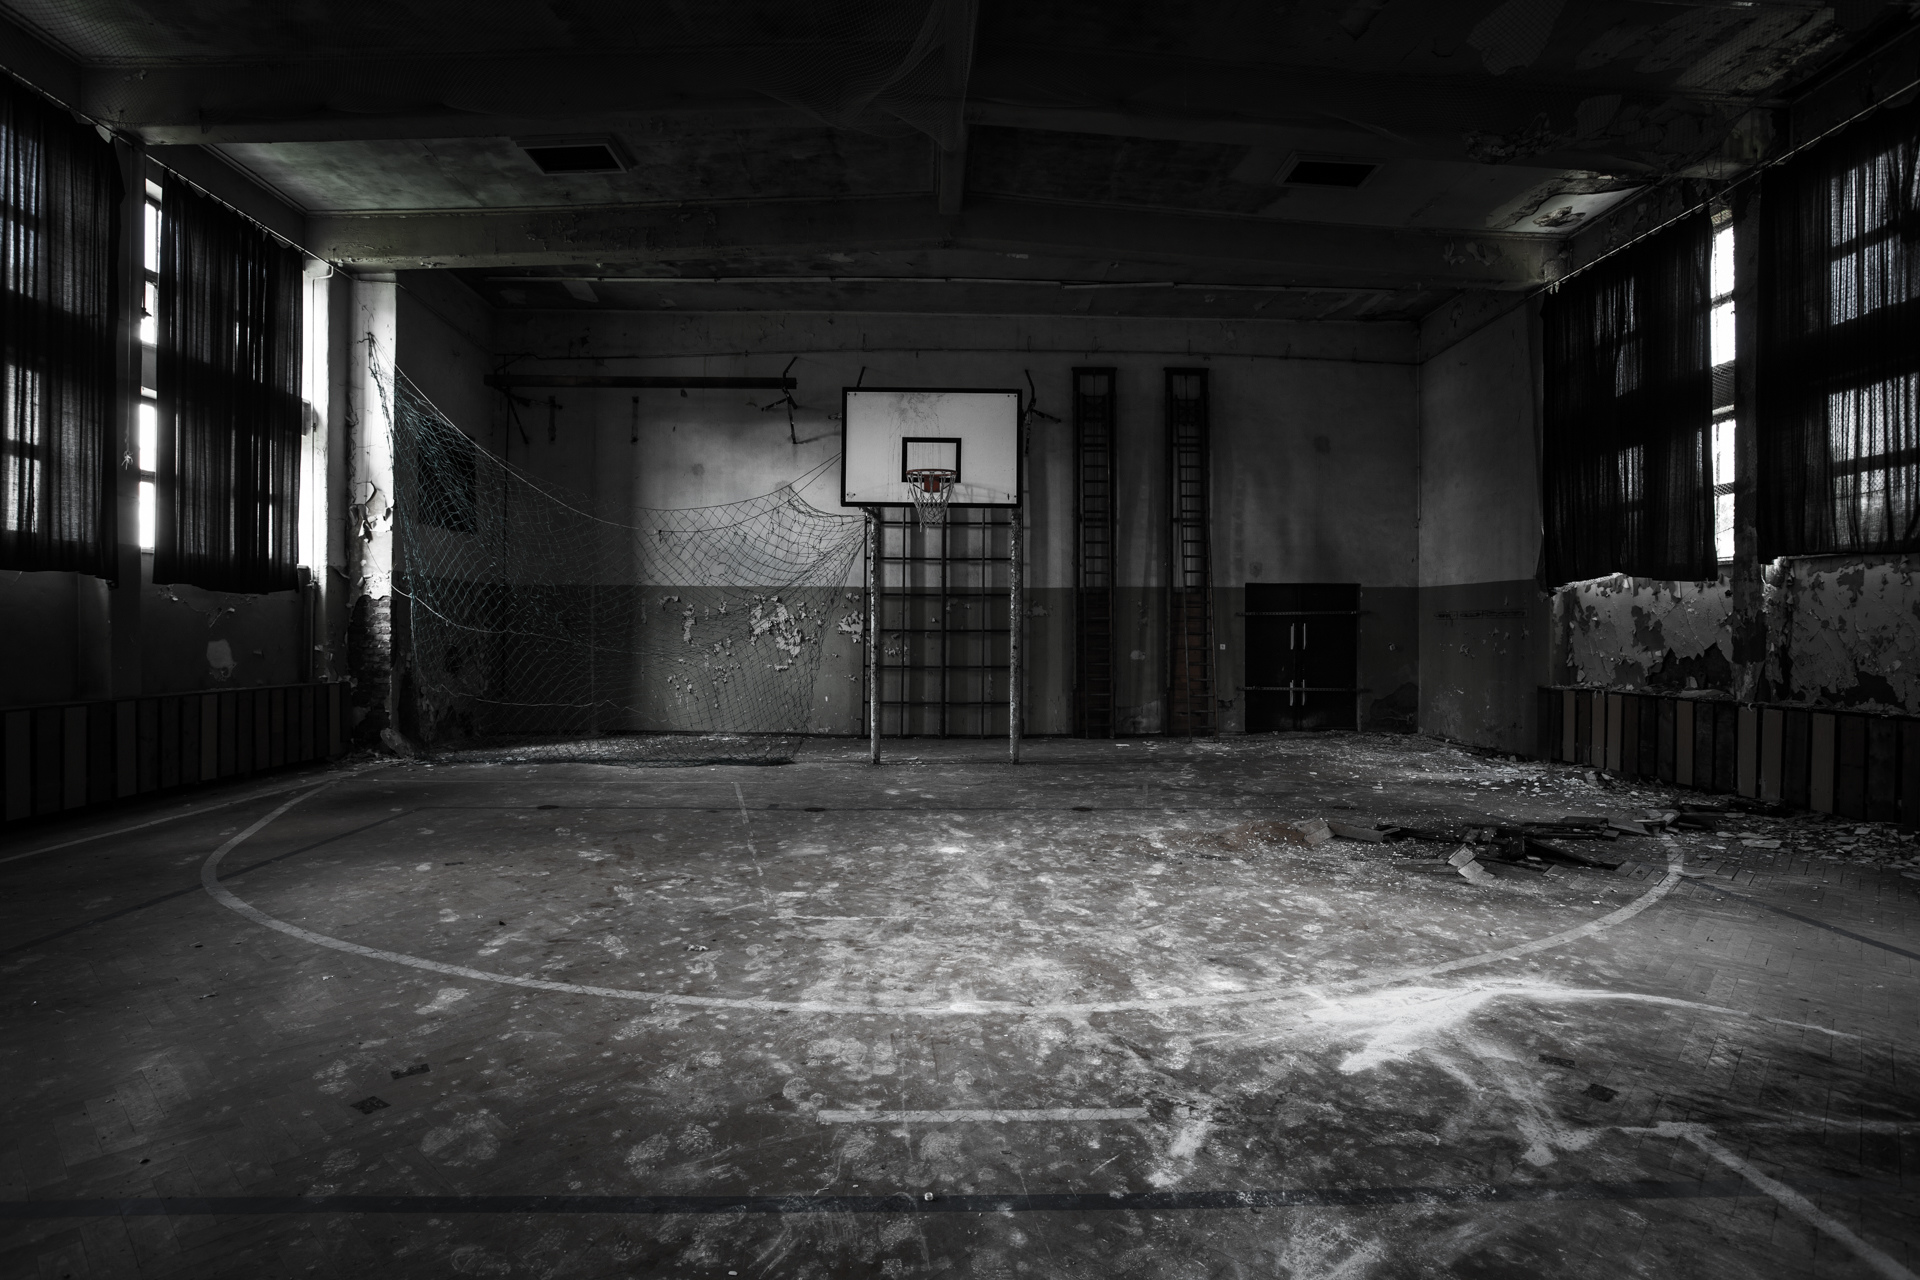 Urban Exploration - Soldier School - The Empty Gym